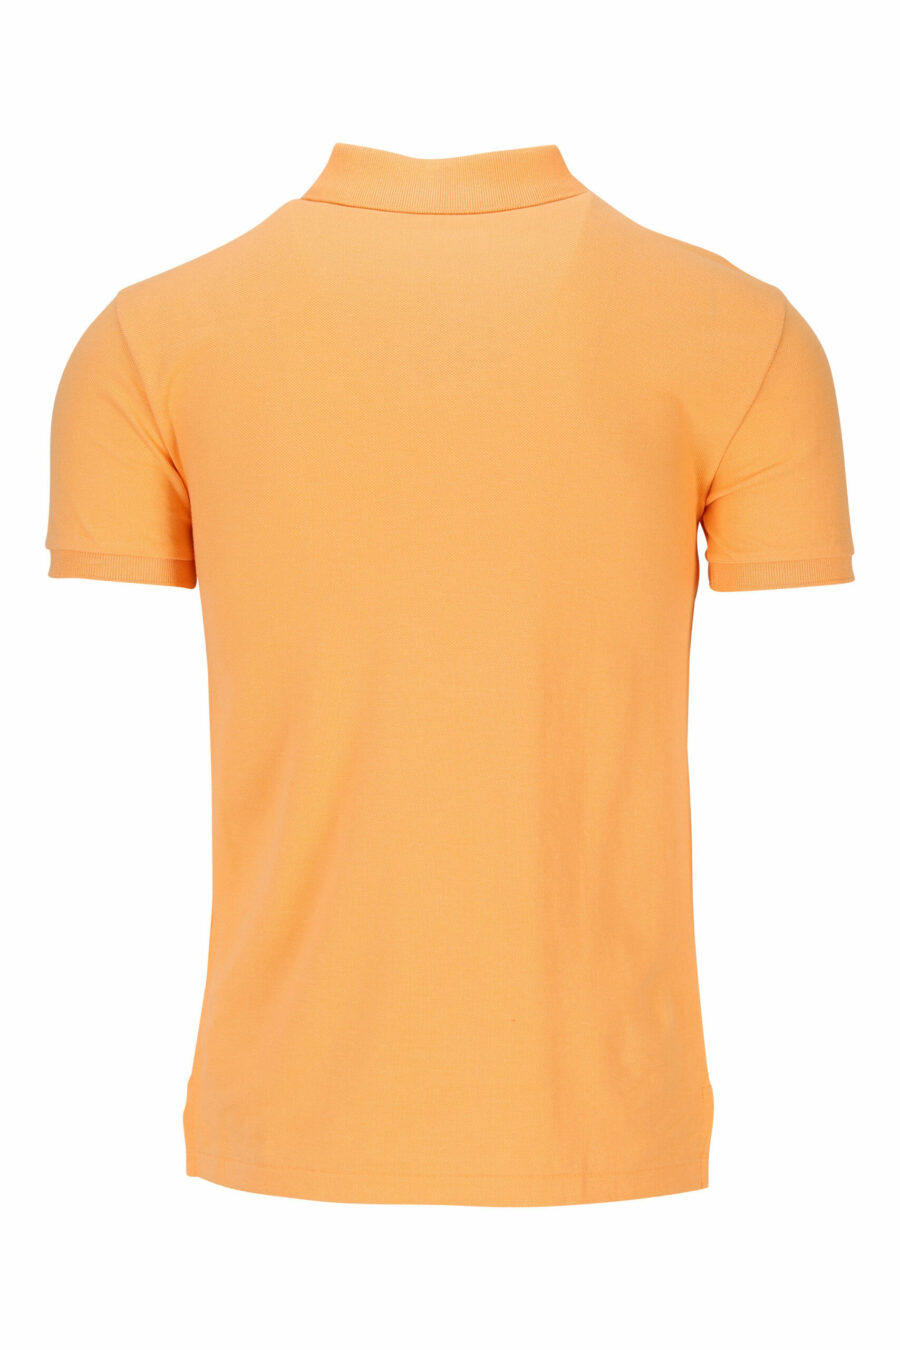 Polo orange avec mini-logo "polo" - 3616411864697 1 à l'échelle